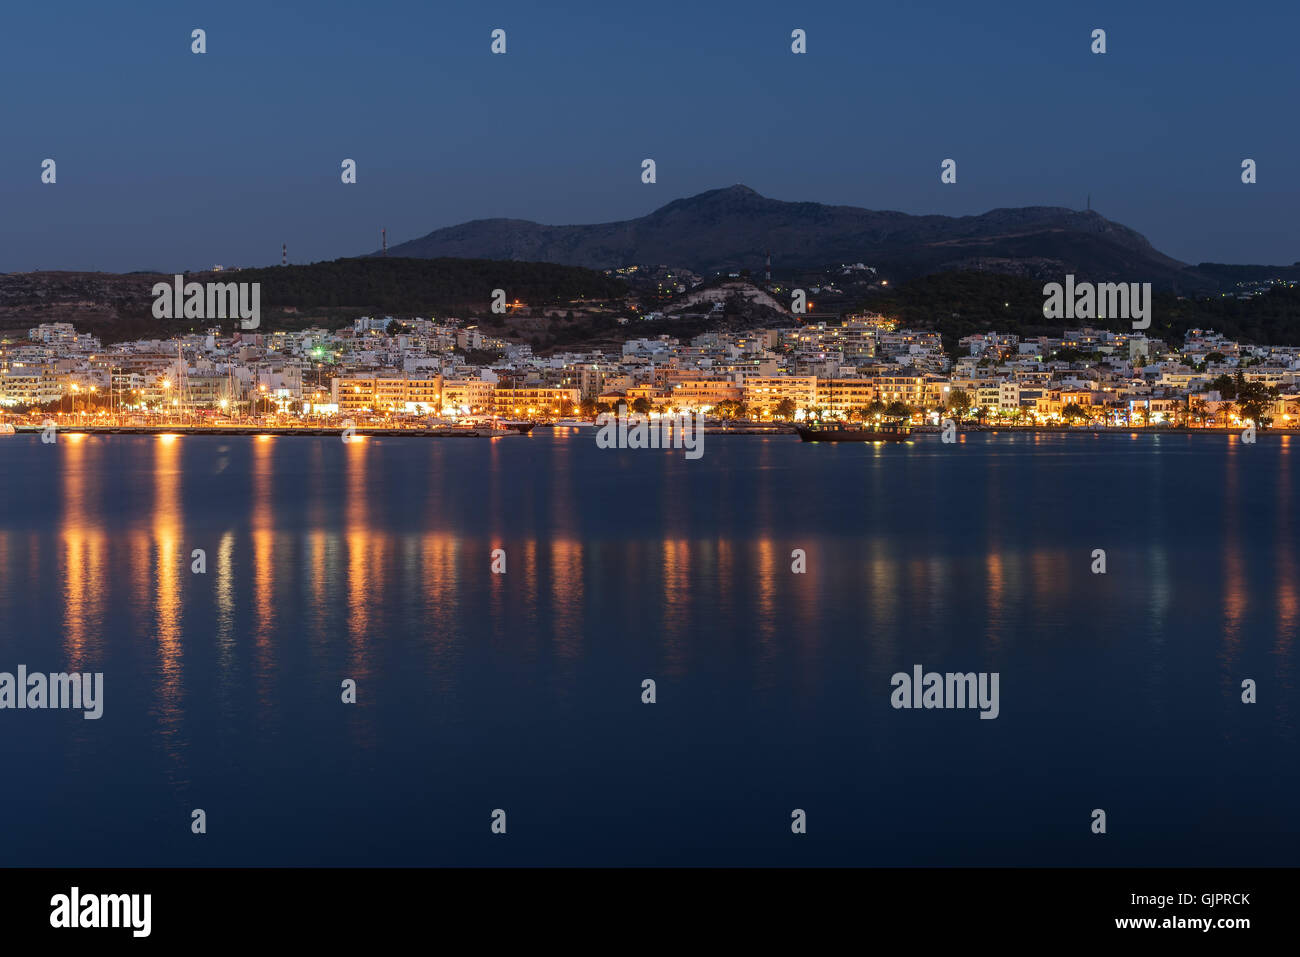 Rethymno, Crete, Greece: downtown at night Stock Photo